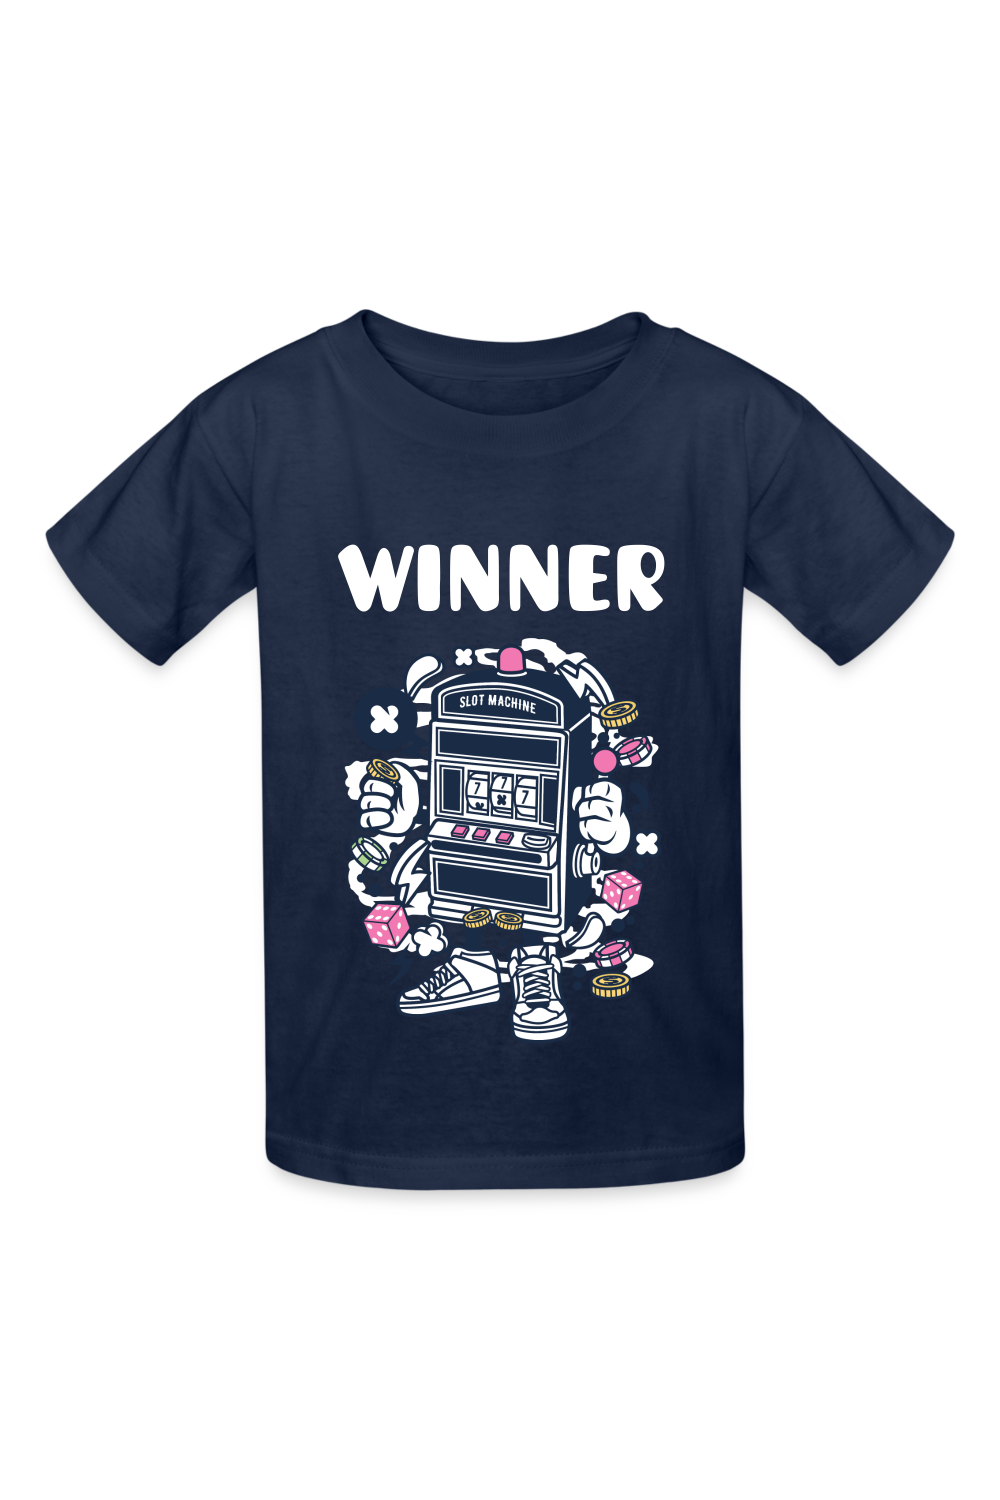 Boys Winner Slot Machine Short Sleeve T-Shirt - navy - NicholesGifts.online